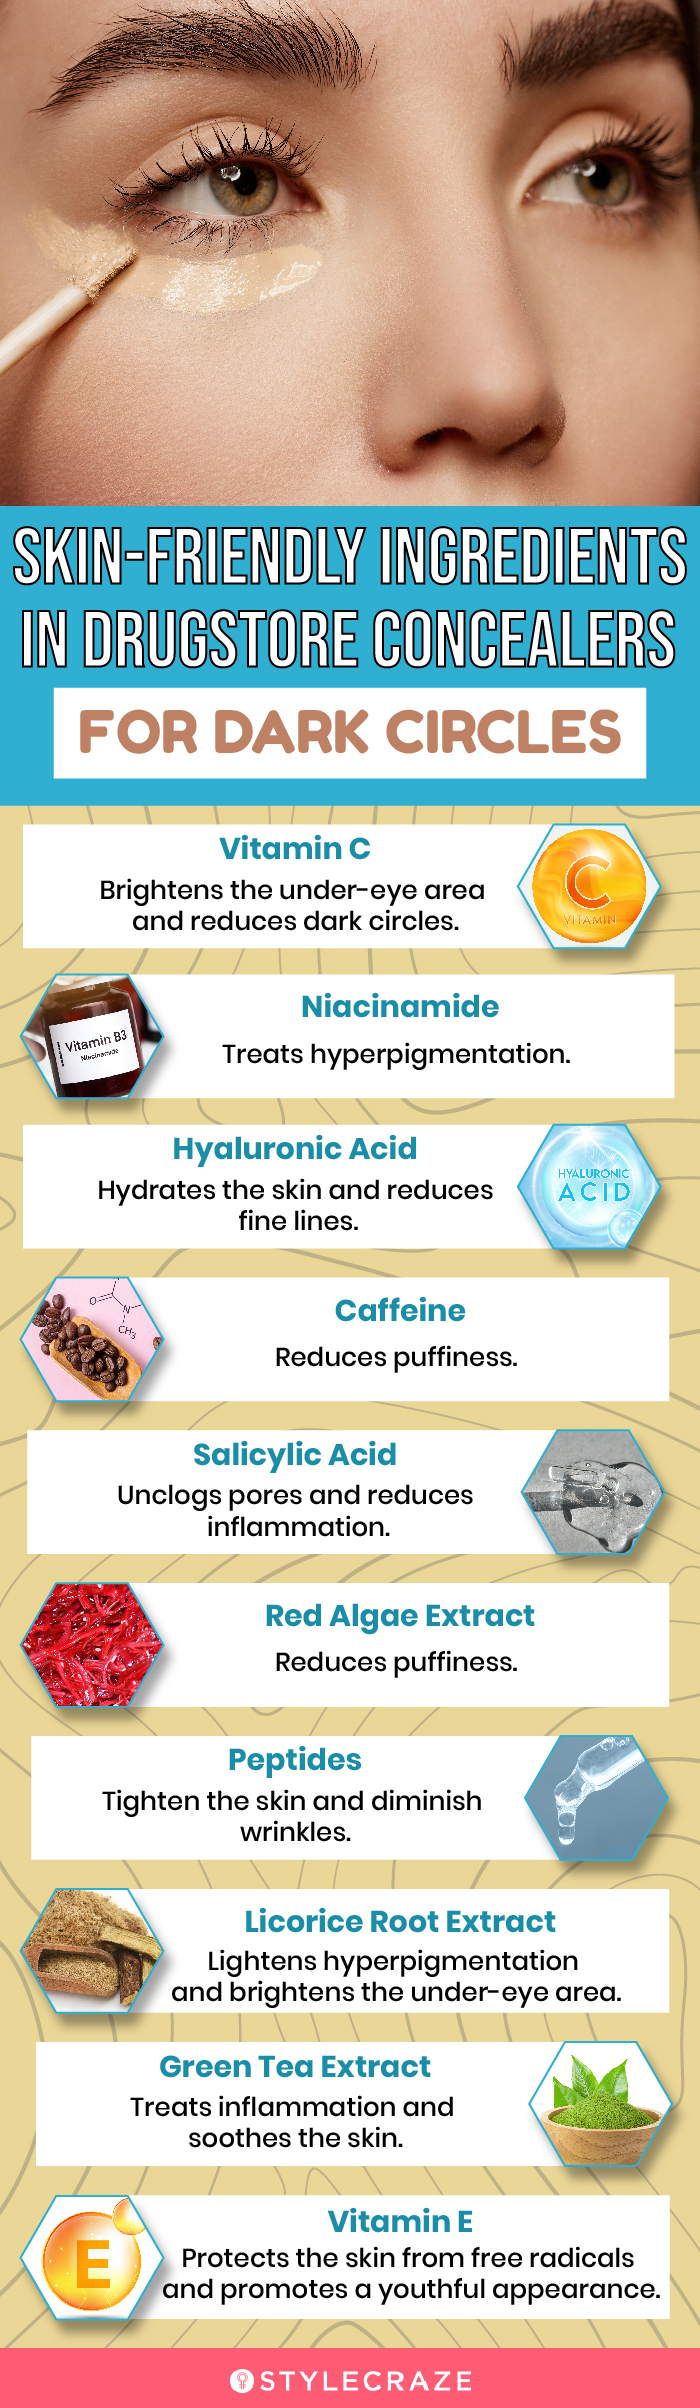 Skin-Friendly Ingredients In Drugstore Concealers For Dark Circles (infographic)